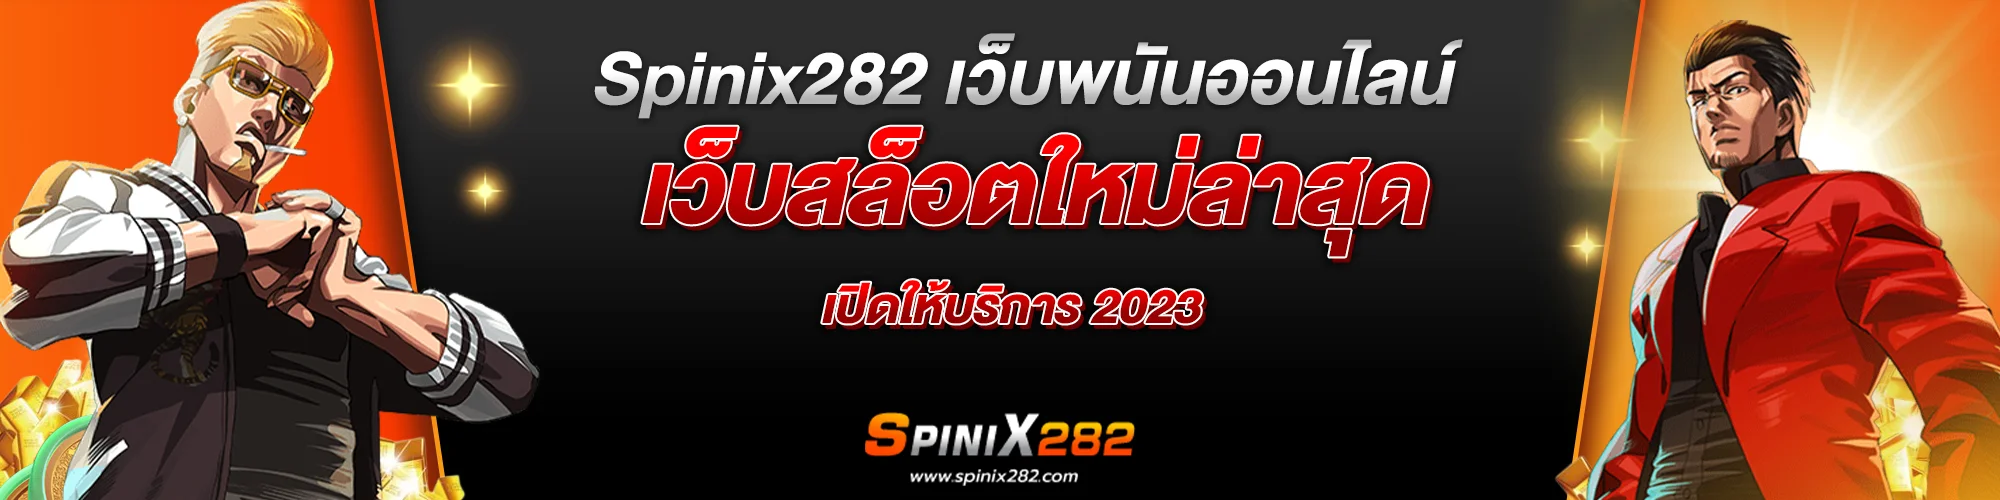 Spinix282 เว็บพนันออนไลน์ เว็บสล็อตใหม่ล่าสุด เปิดให้บริการ 2023​